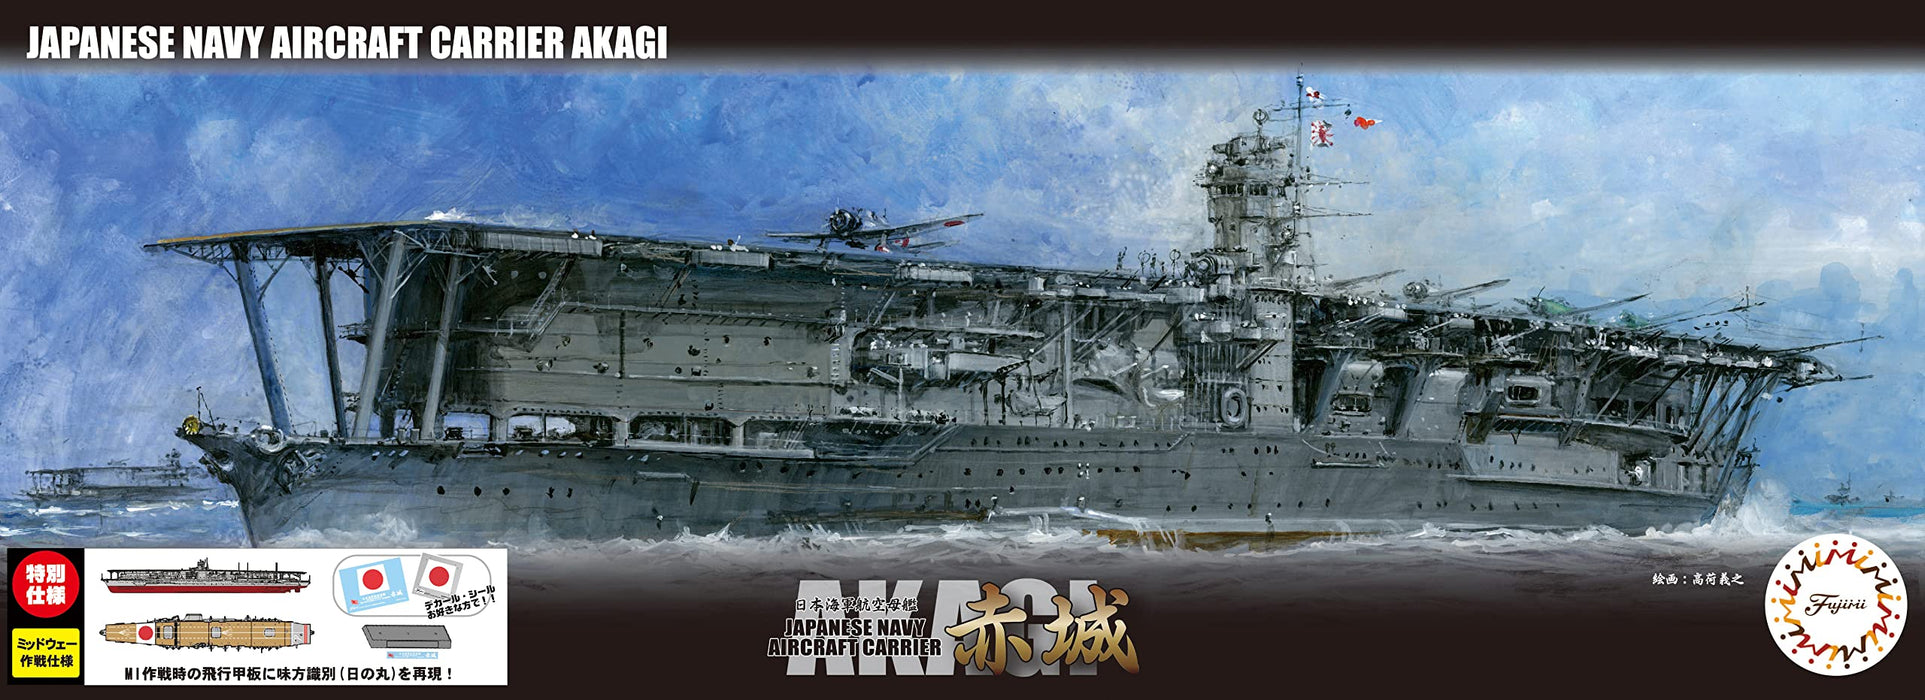 FUJIMI Fune Next 1/700 Flugzeugträger der japanischen Marine Akagi Special Edition Battle of Midway 1945 Plastikmodell